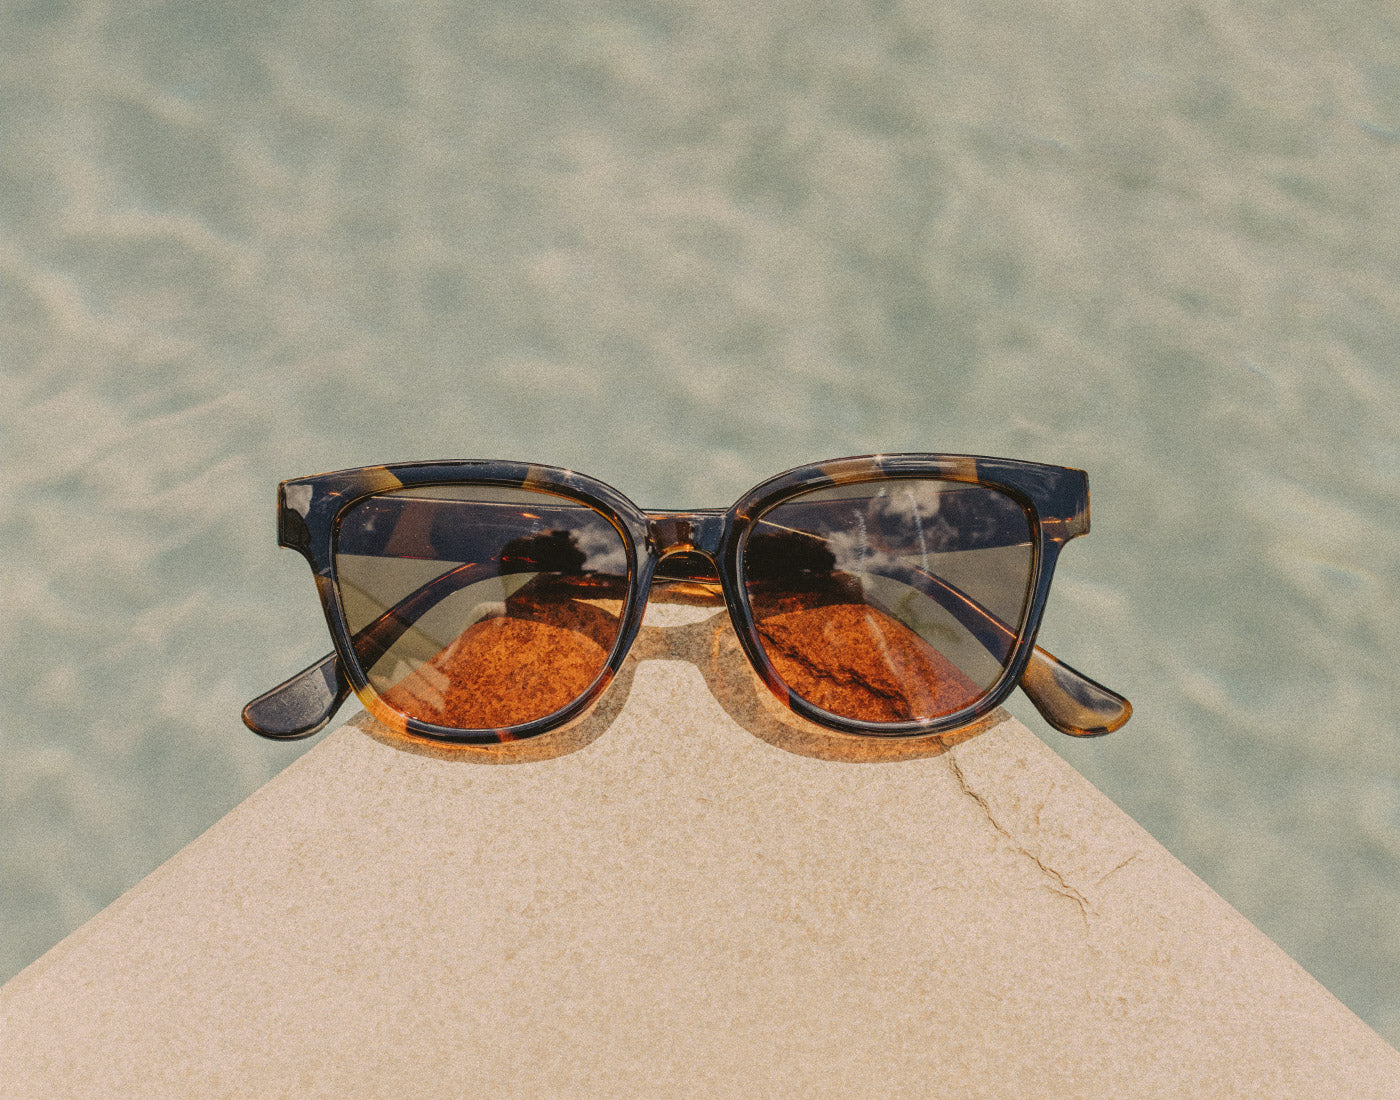 sunski miho sunglasses on side of a pool 